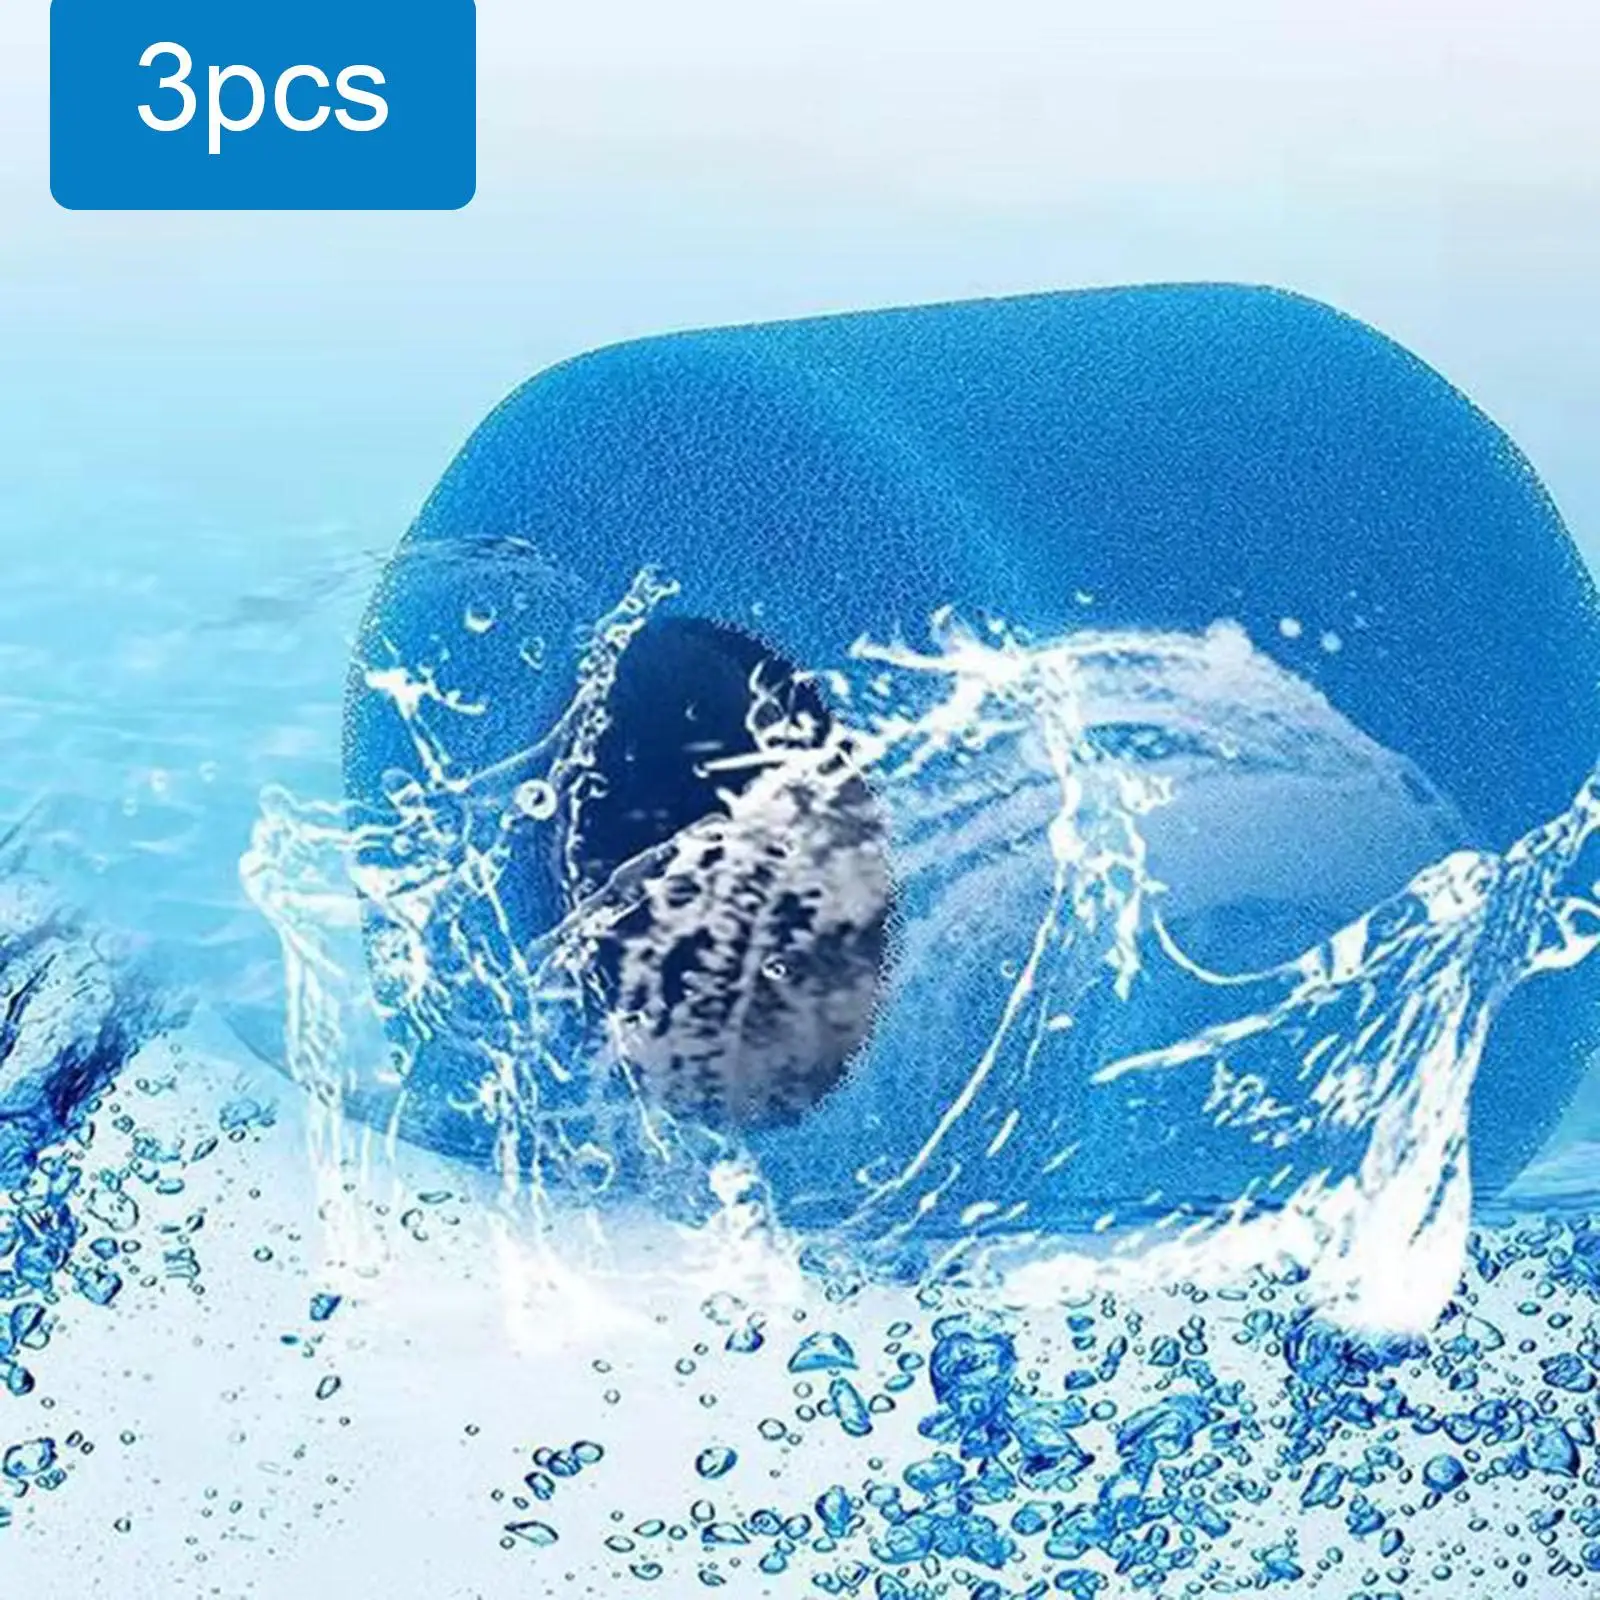 3Pcs Pool Filter Sponge Pool Cleaner Foam Replacement for Type V1 Equipment